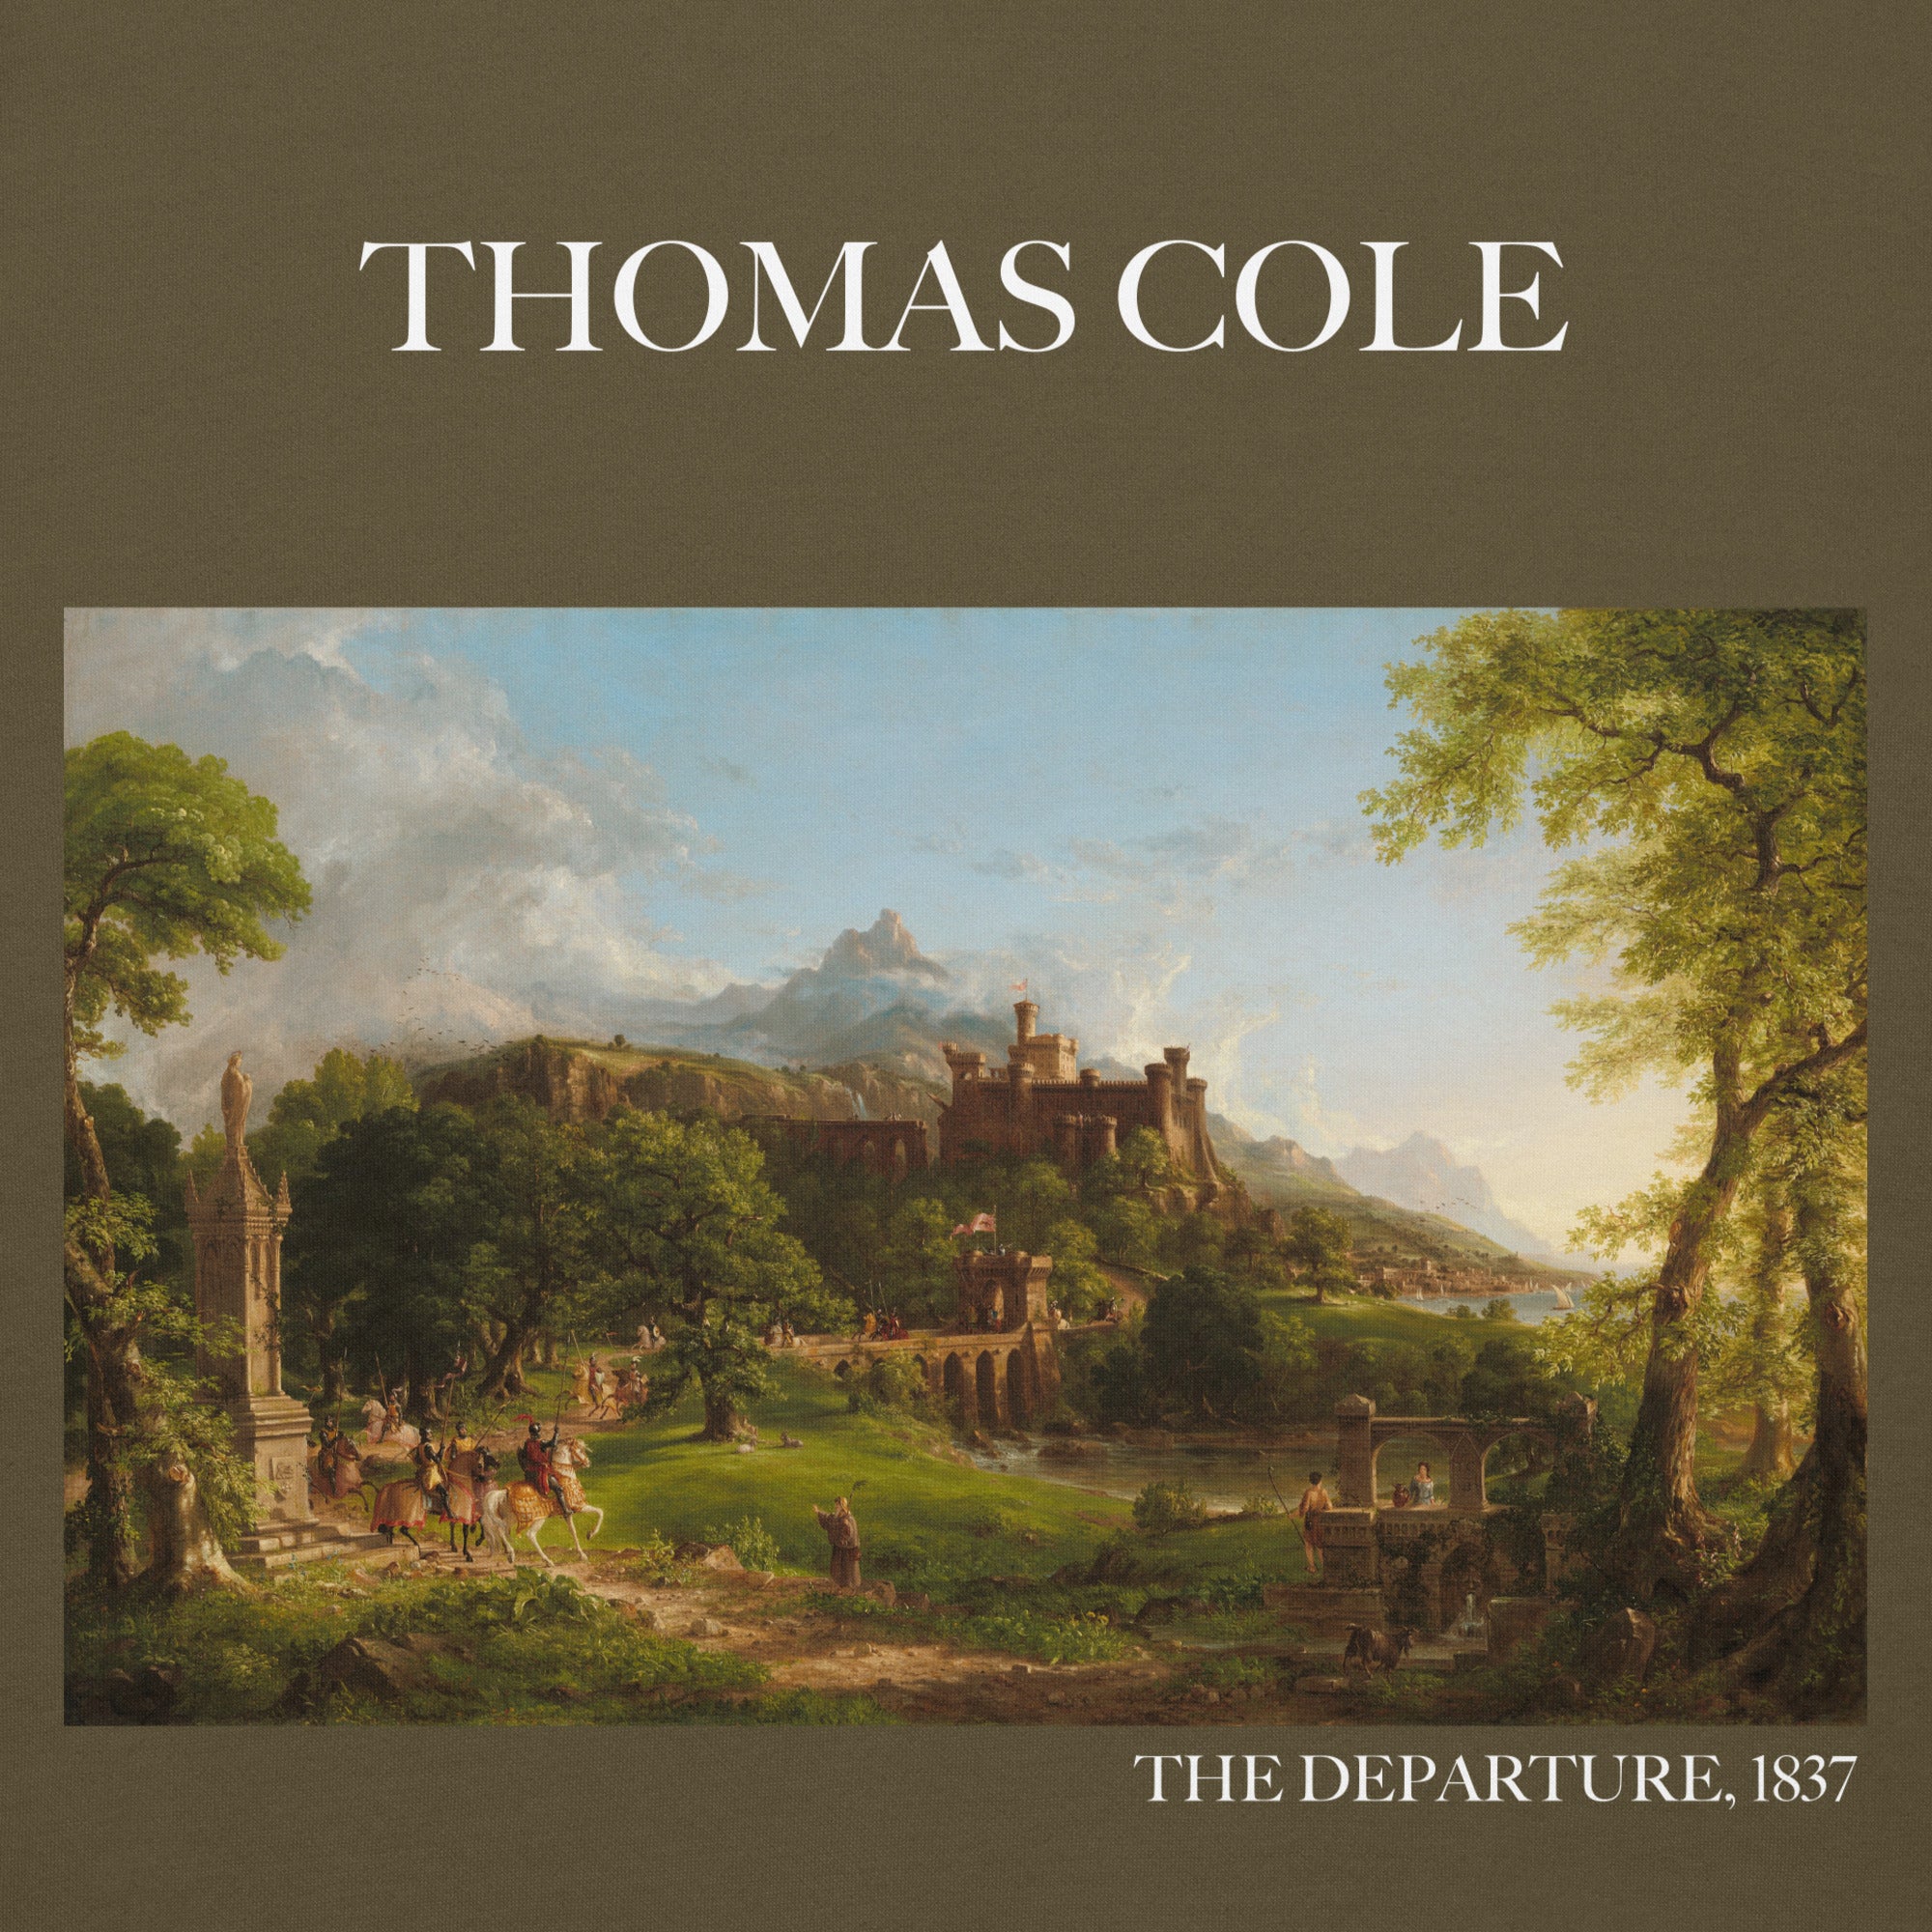 Thomas Cole 'The Departure' Famous Painting Hoodie | Unisex Premium Art Hoodie